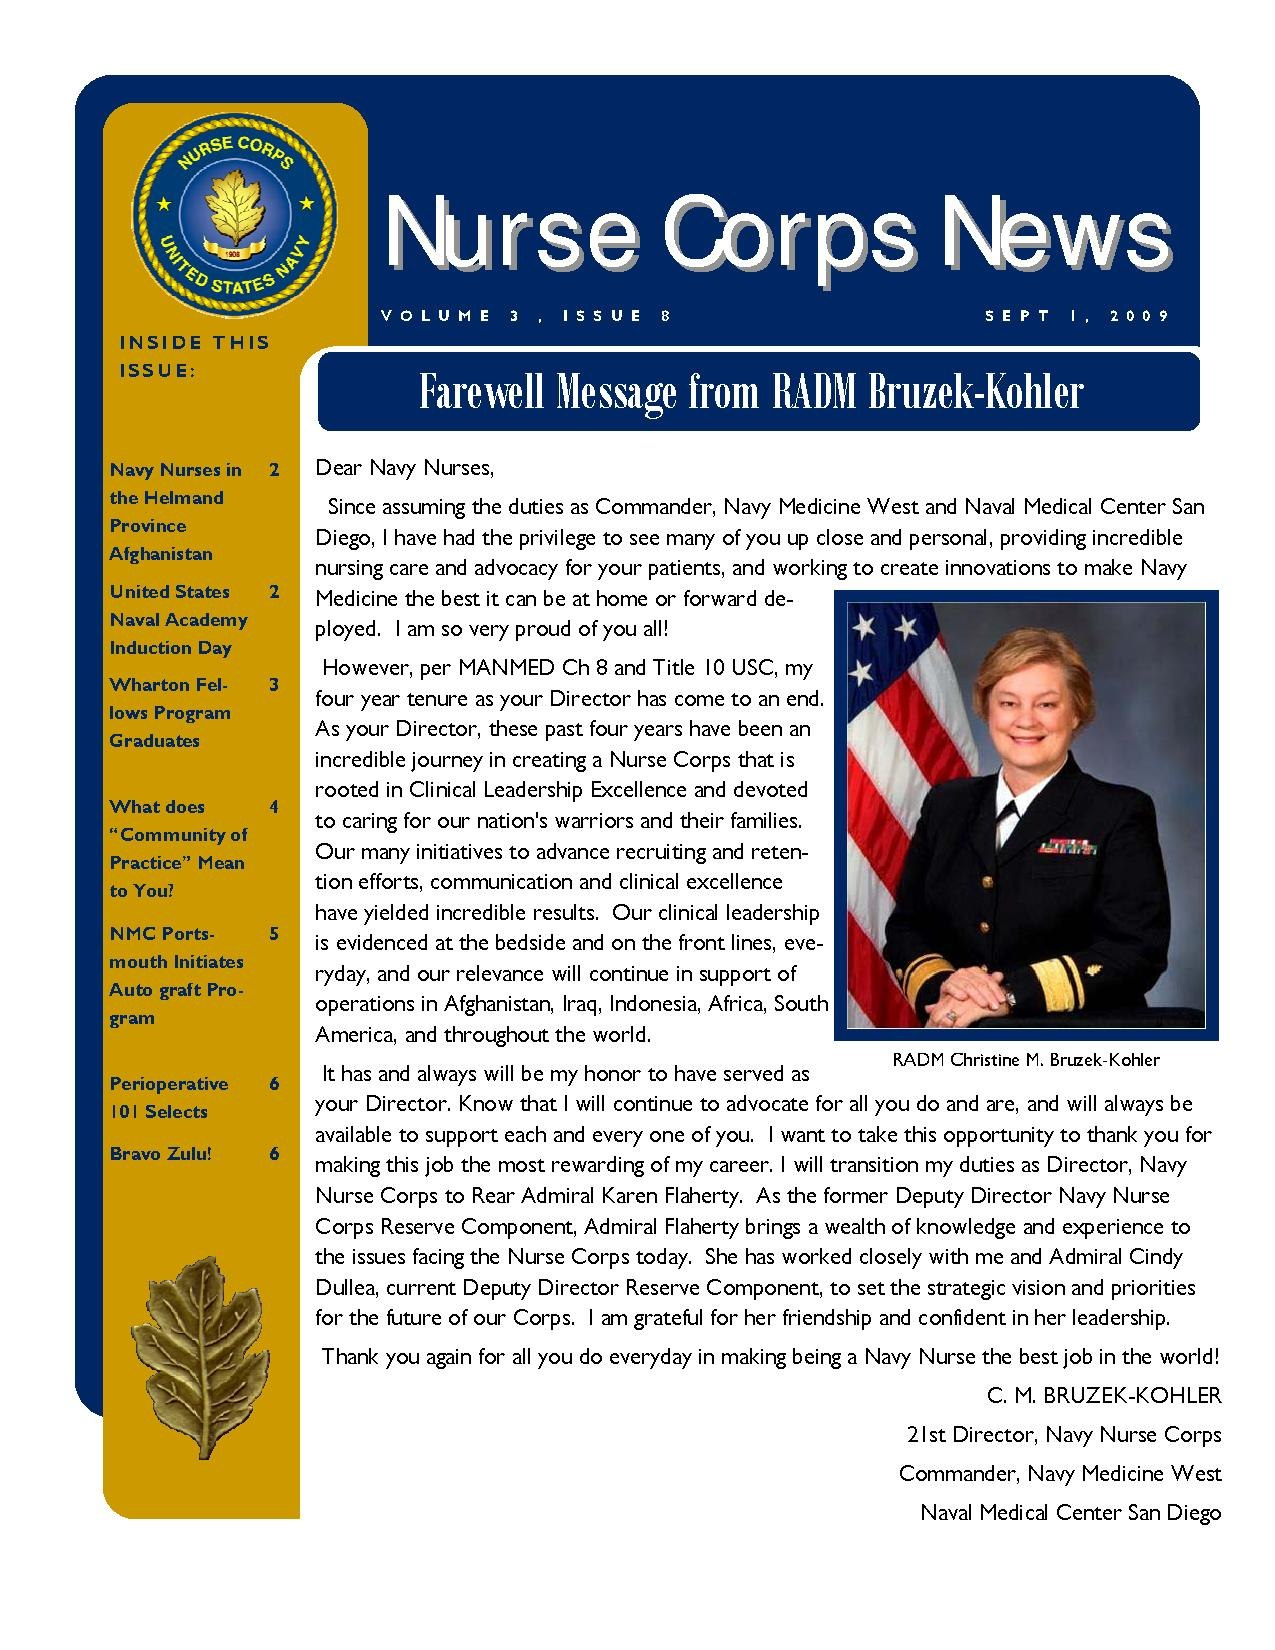 File Nurse Corps News Vol 3 Issue 8 IA 01SeptFinal pdf 